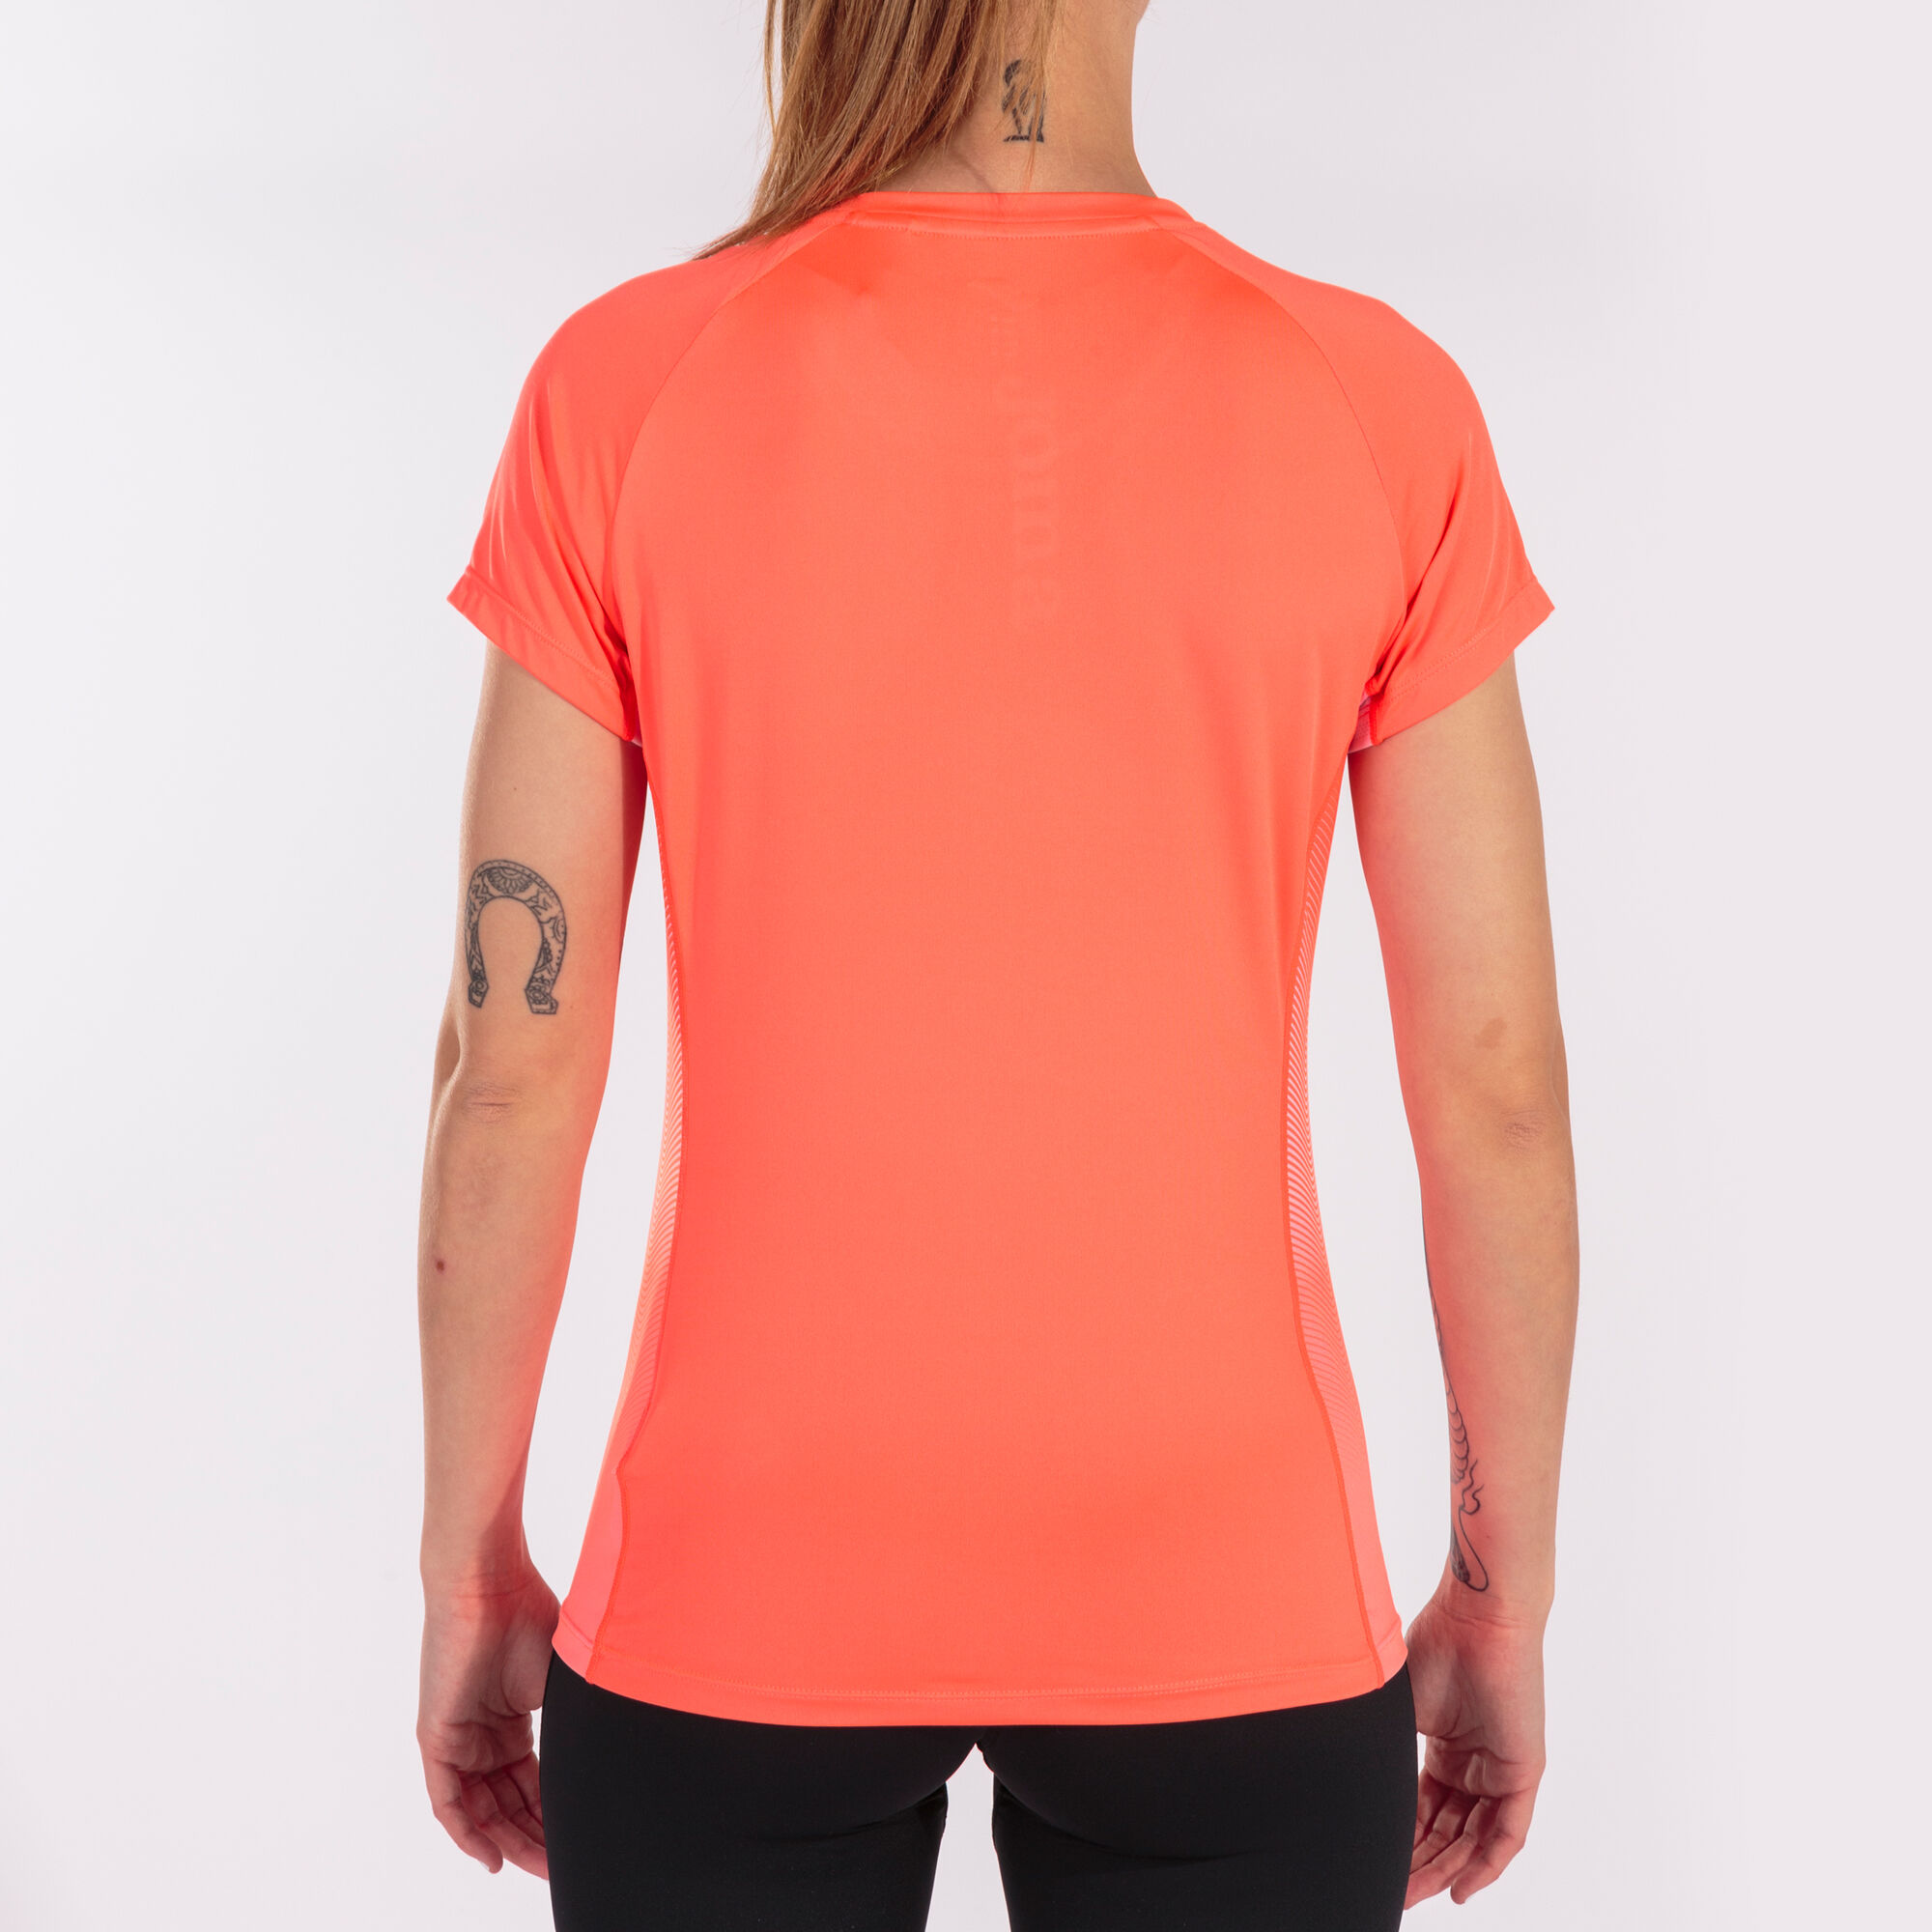 Camiseta Running Mujer Joma Elite VII. 901020.040 Flúor Coral-white. por  19,13 €